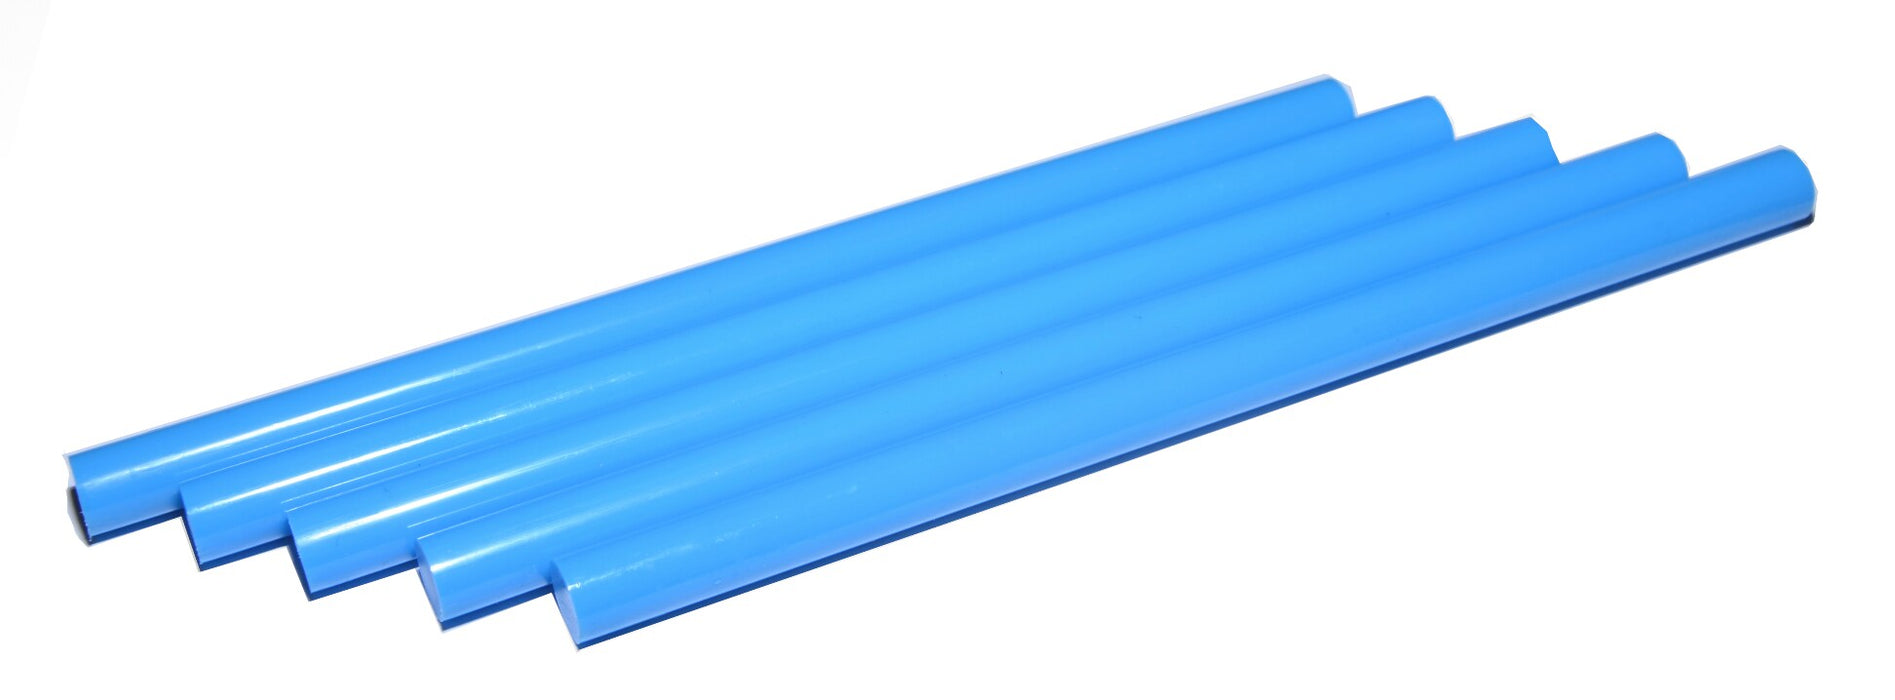 PDR Schmelzkleber blau 11mm Sticks